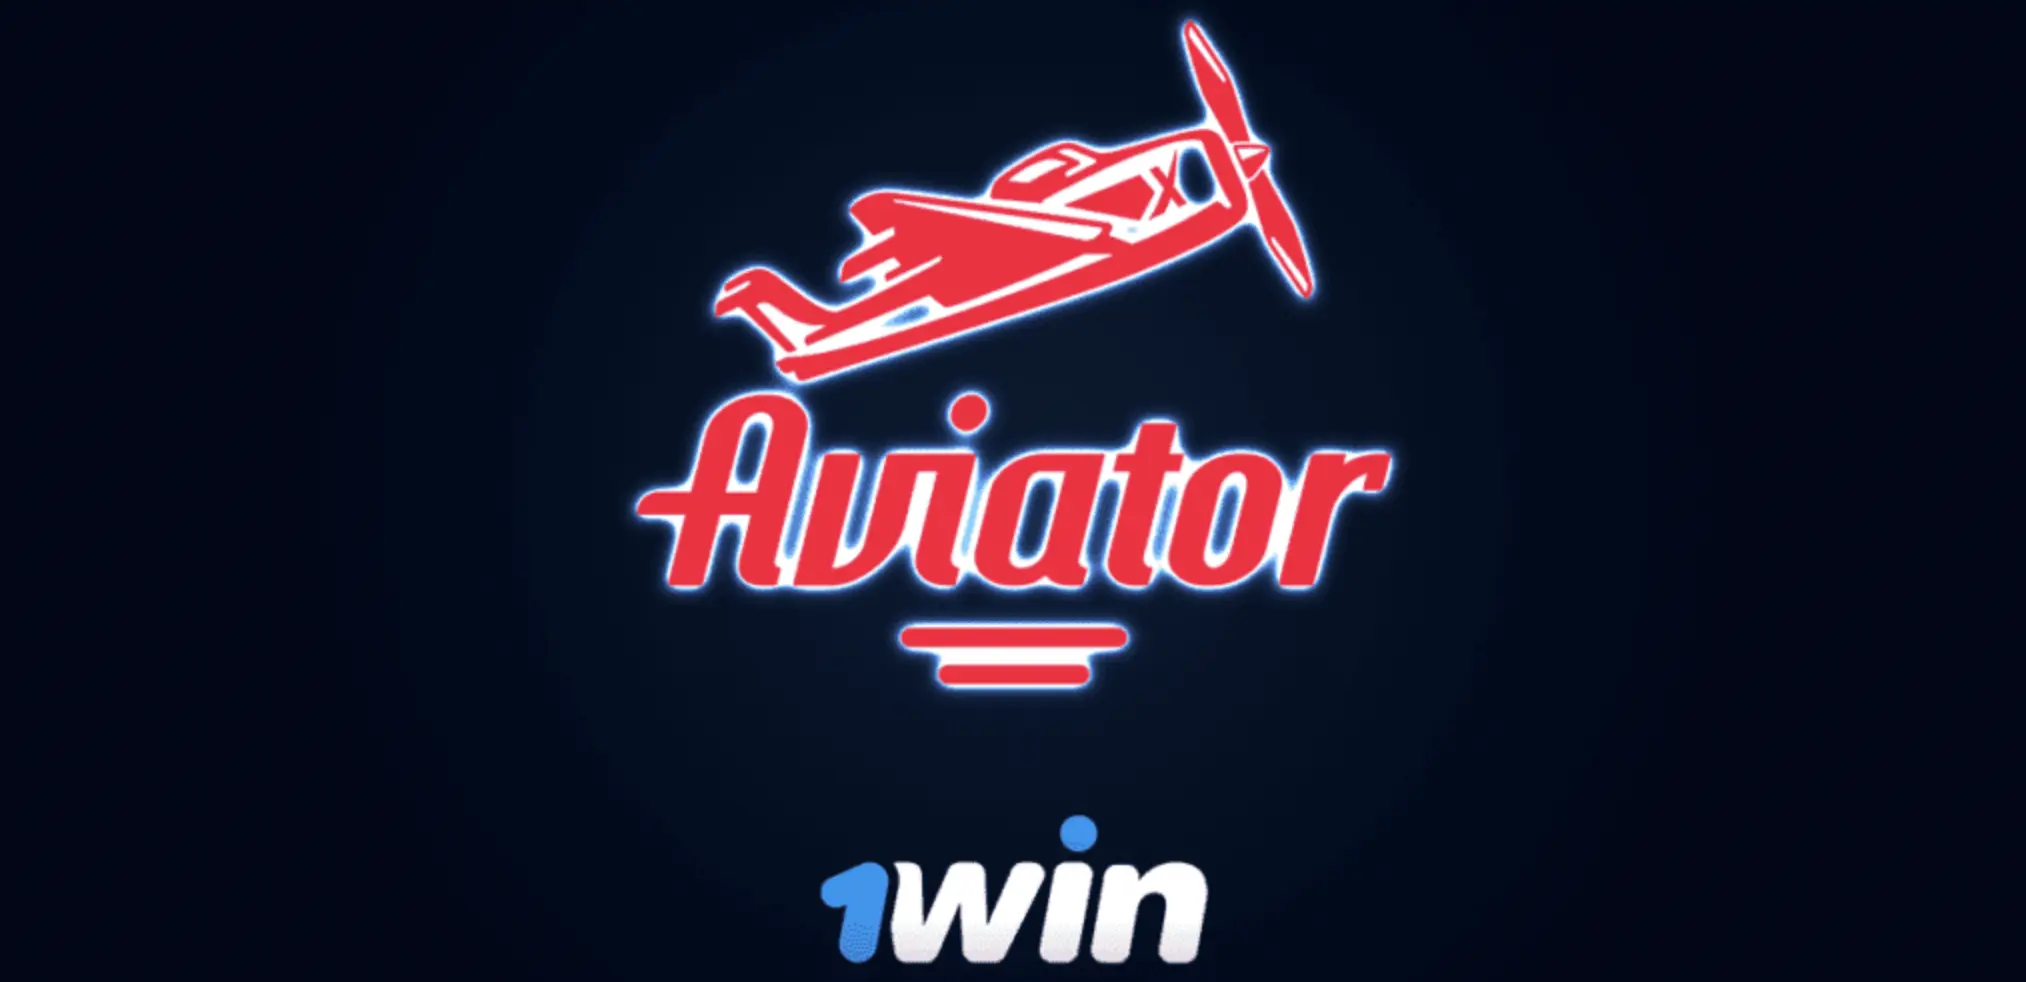 Авиатор игра 1вин aviator games. Aviator слот. Авиатор игра в казино. Игра Авиатор 1win. Авиатор казино логотип.